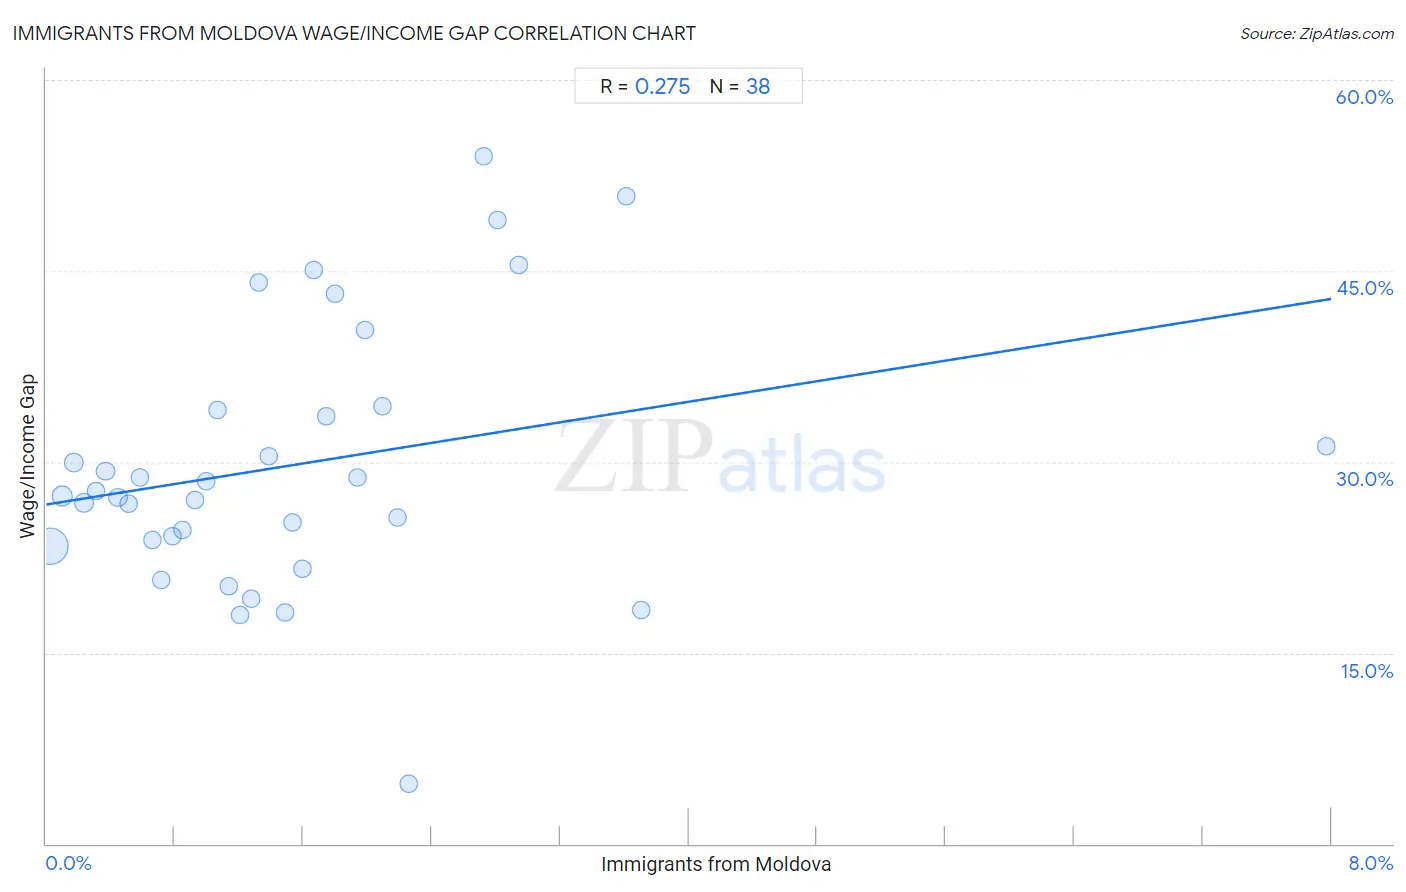 Immigrants from Moldova Wage/Income Gap